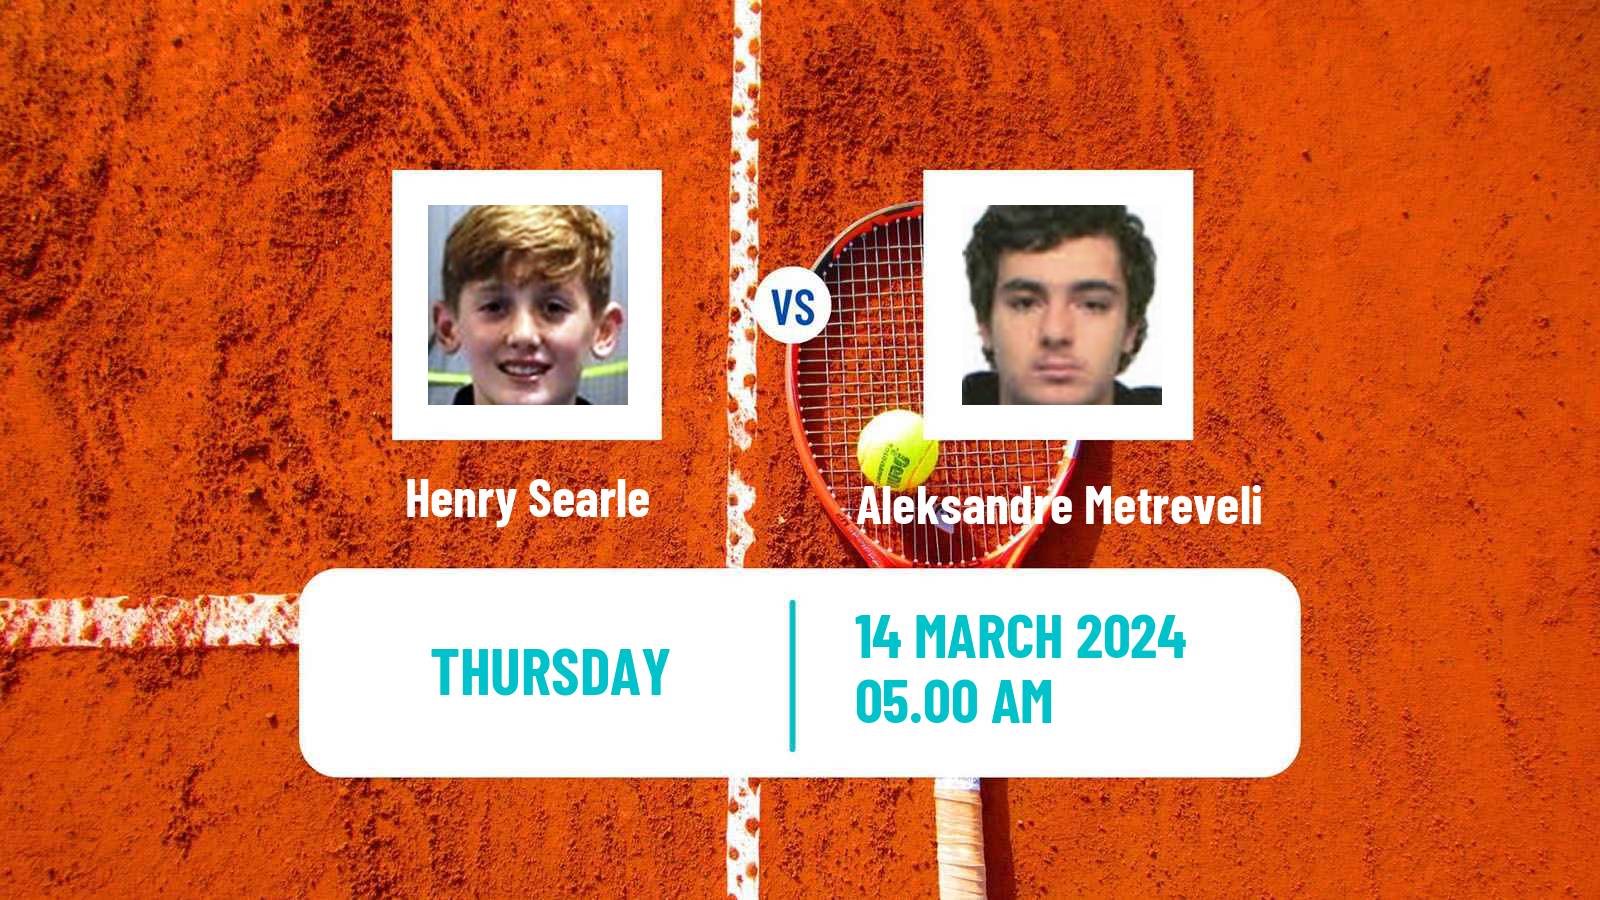 Tennis ITF M15 Antalya 6 Men Henry Searle - Aleksandre Metreveli